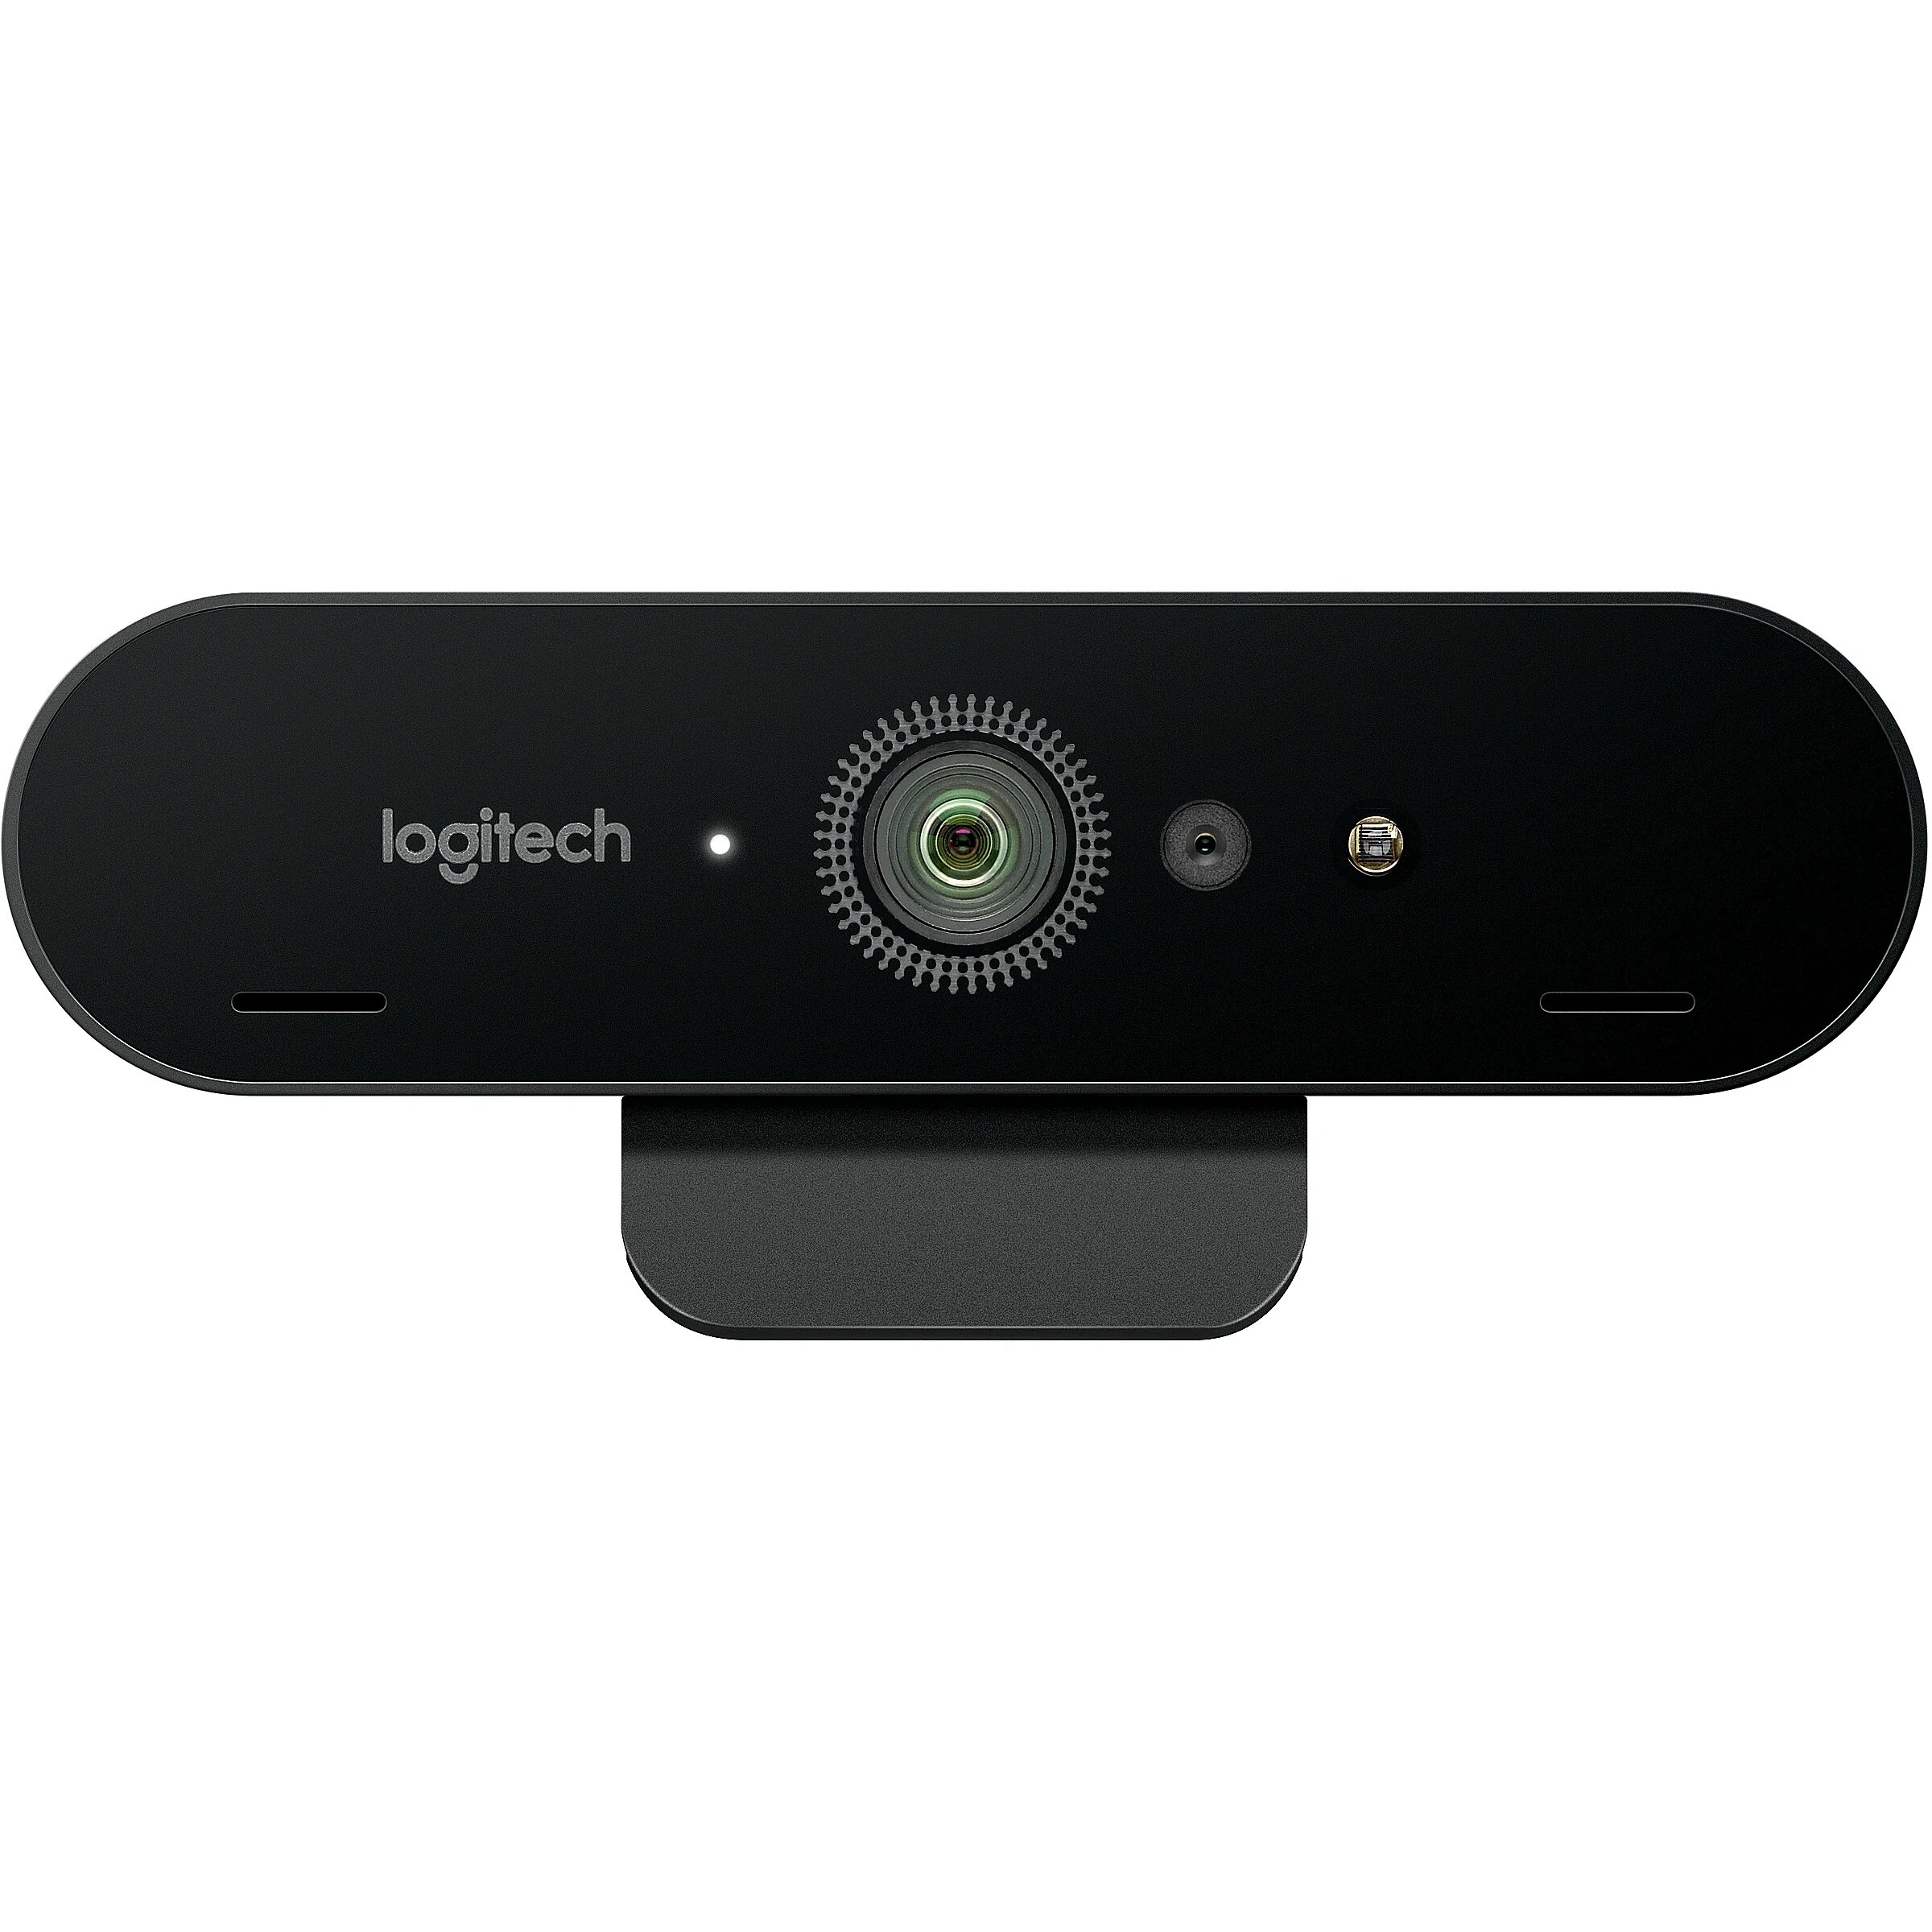 Логитеч брио. Веб-камера Logitech webcam Brio (960-001106).